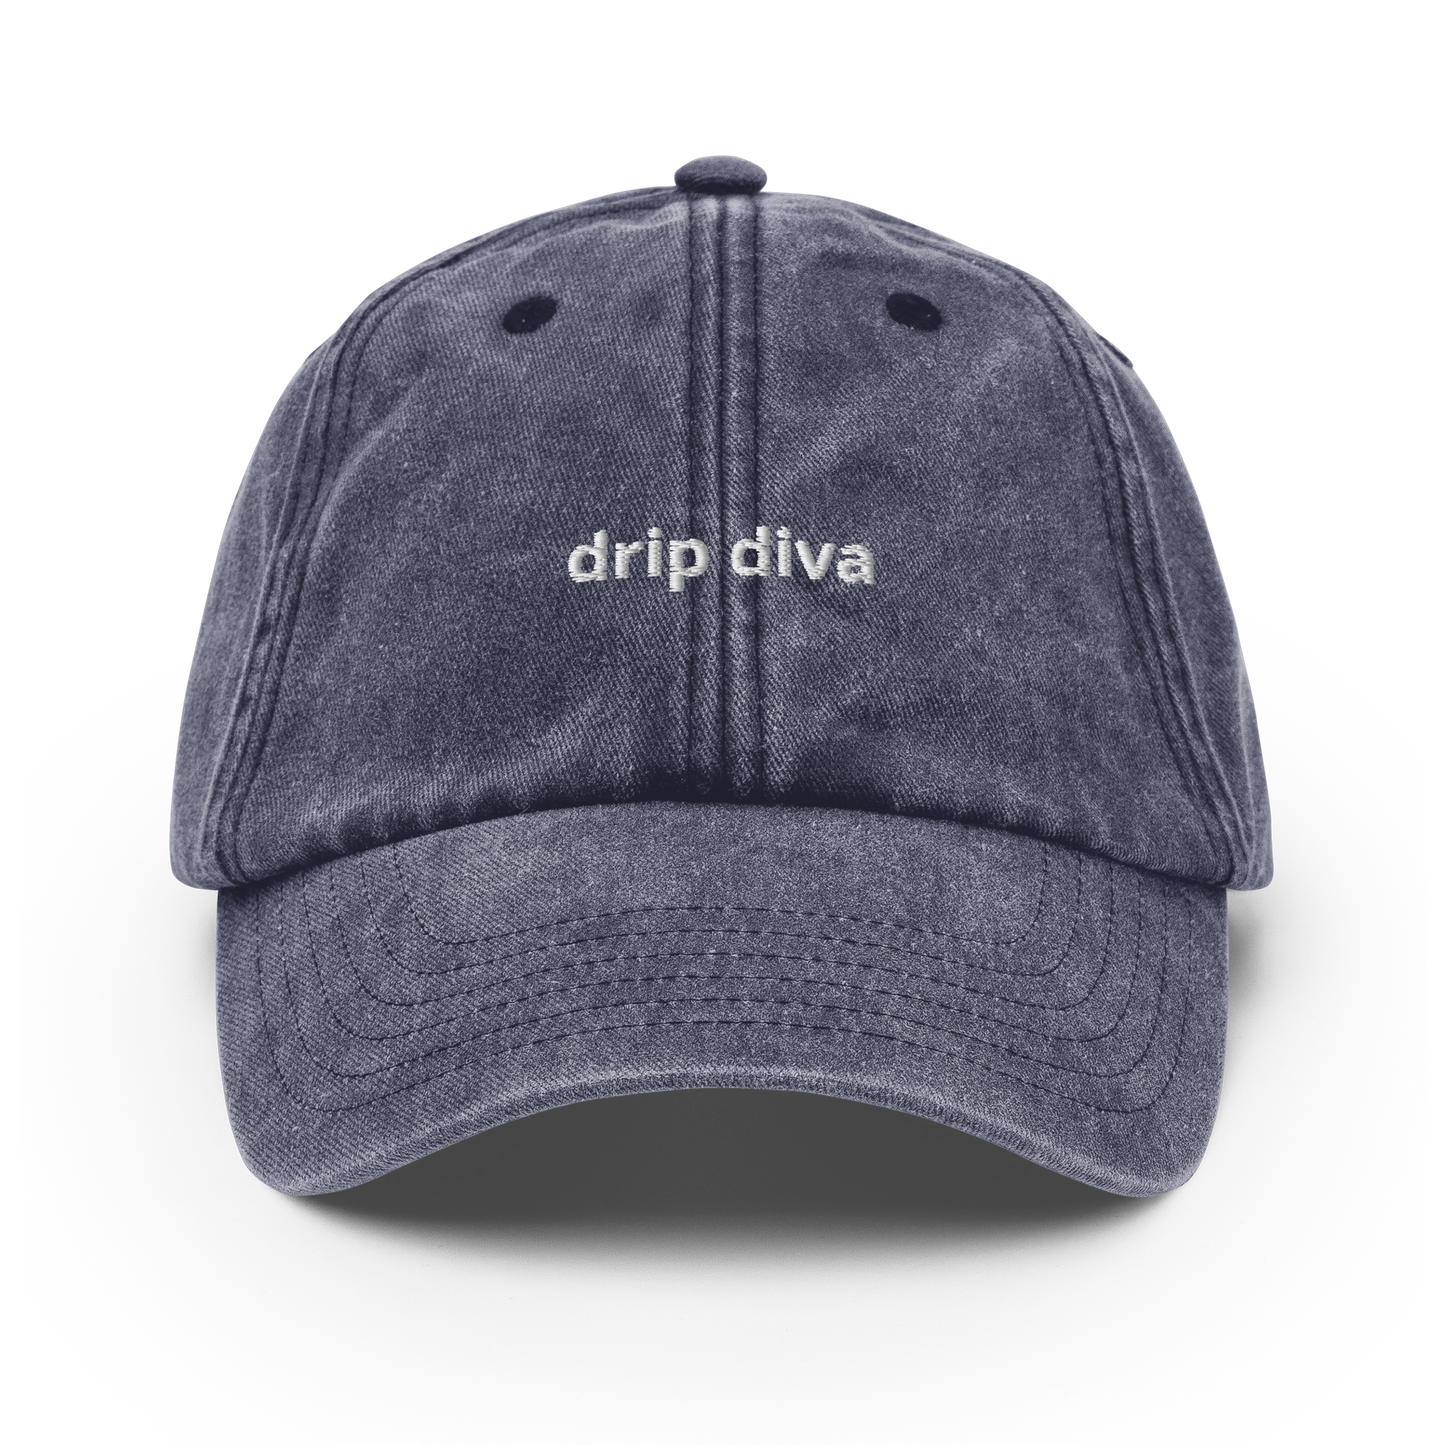 Drip Diva - Vintage Hat